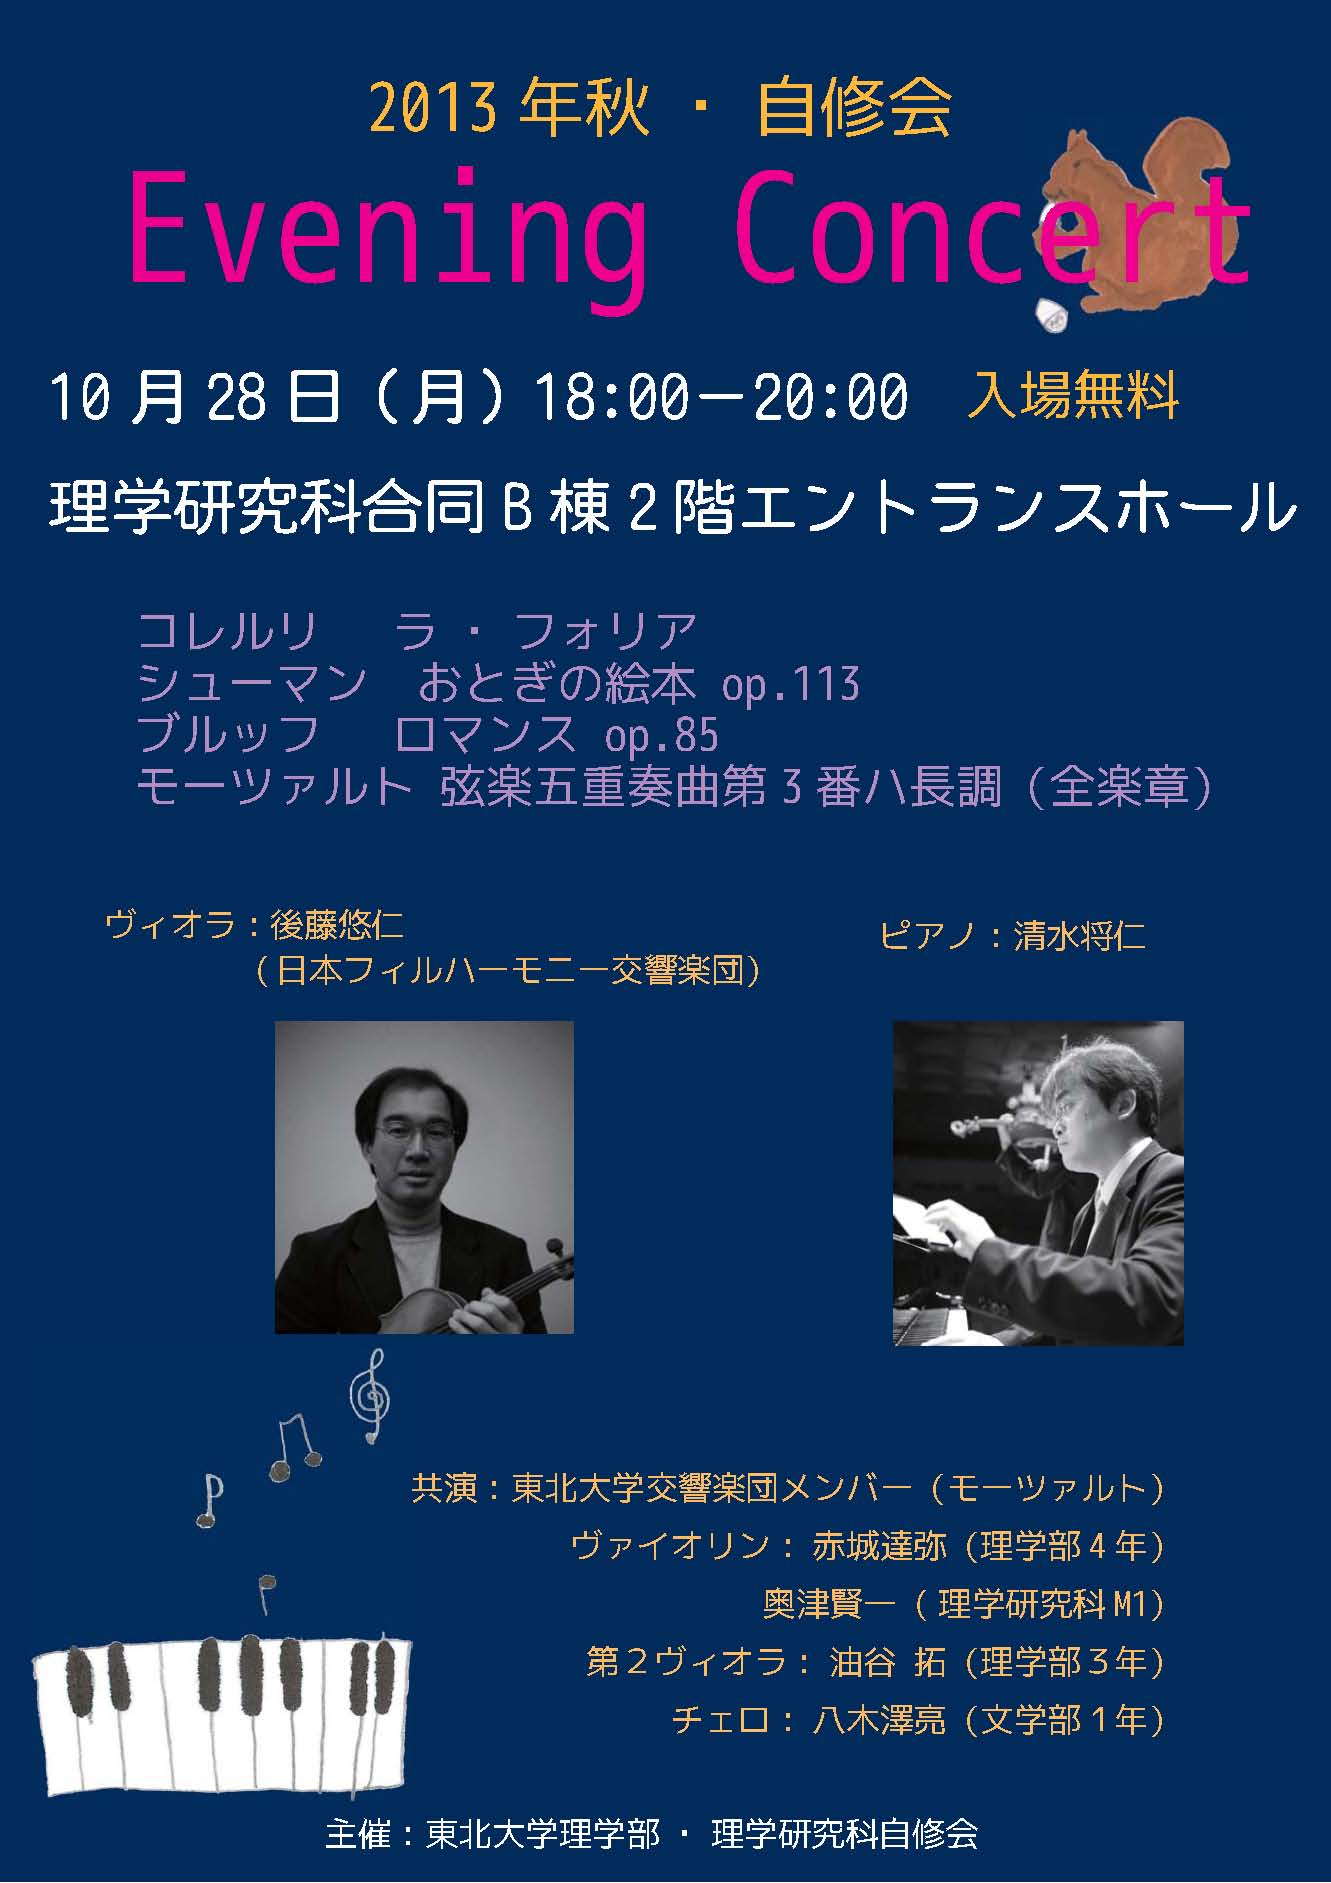 http://www.sci.tohoku.ac.jp/news/concert131028.jpg